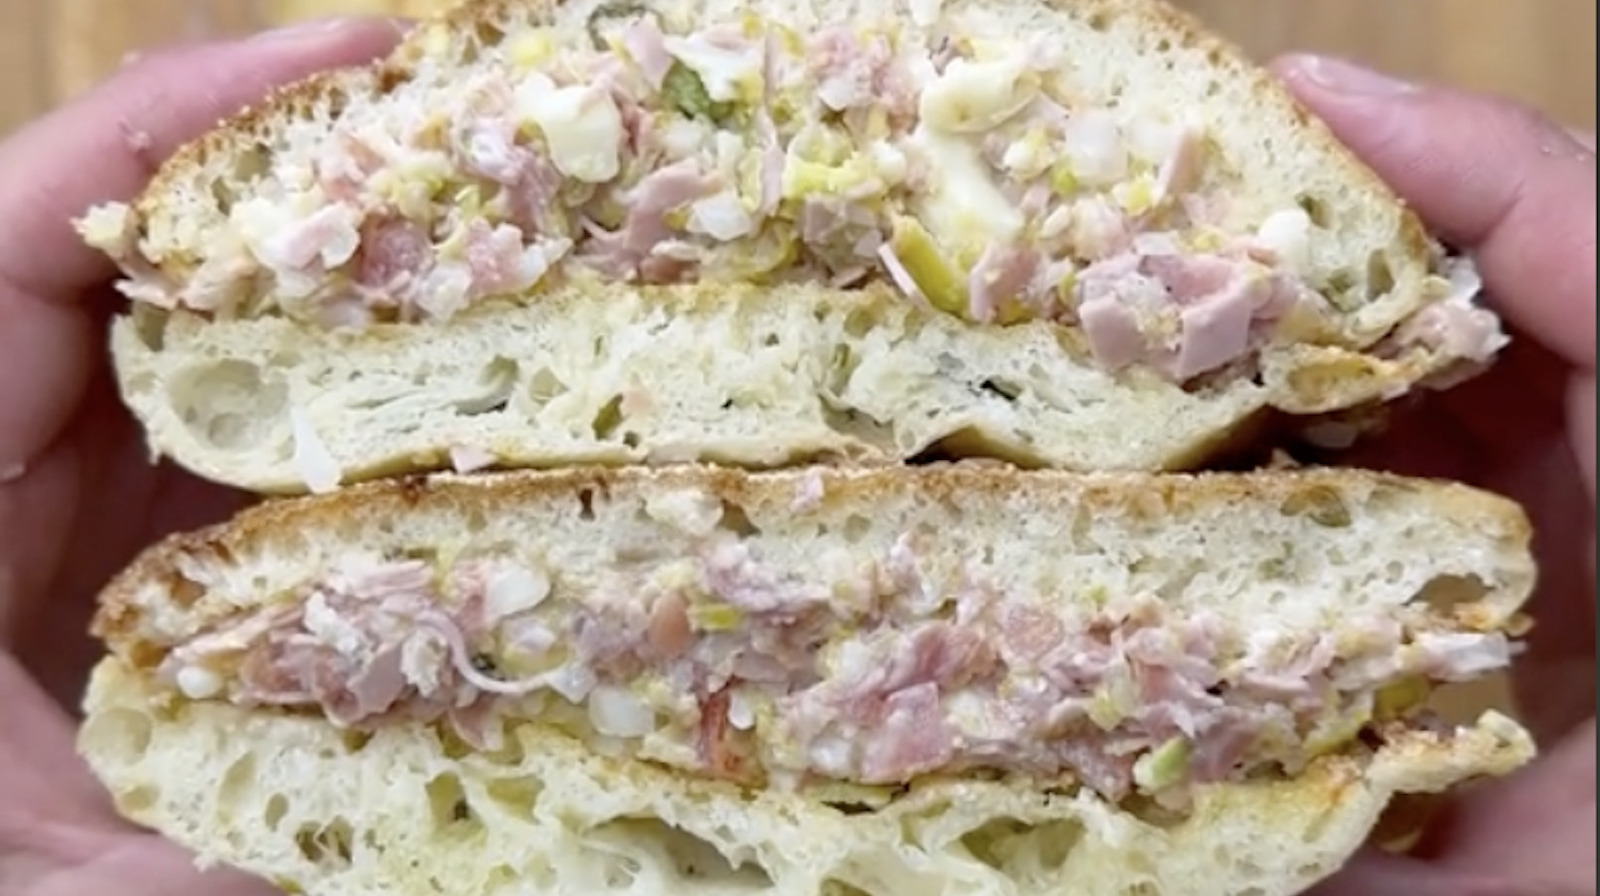 TikTok Viral Chopped Italian Sub Sandwich Recipe - Together as Family